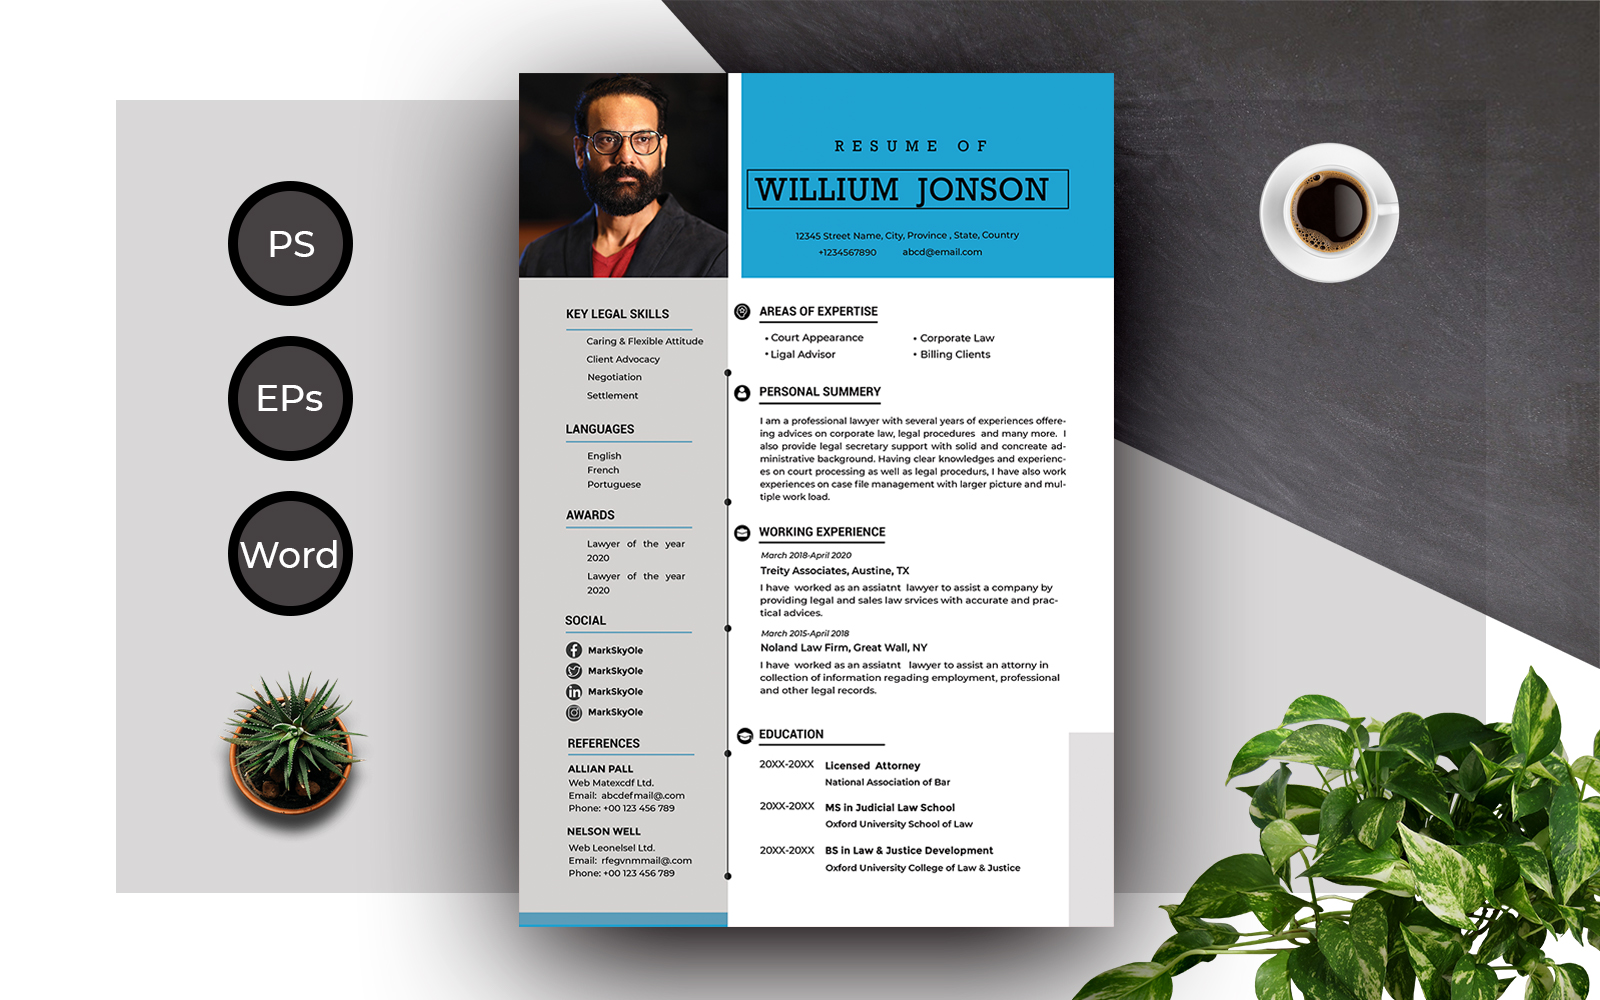 Resume Templates of Willium Jonson Creative Professional CV Resume